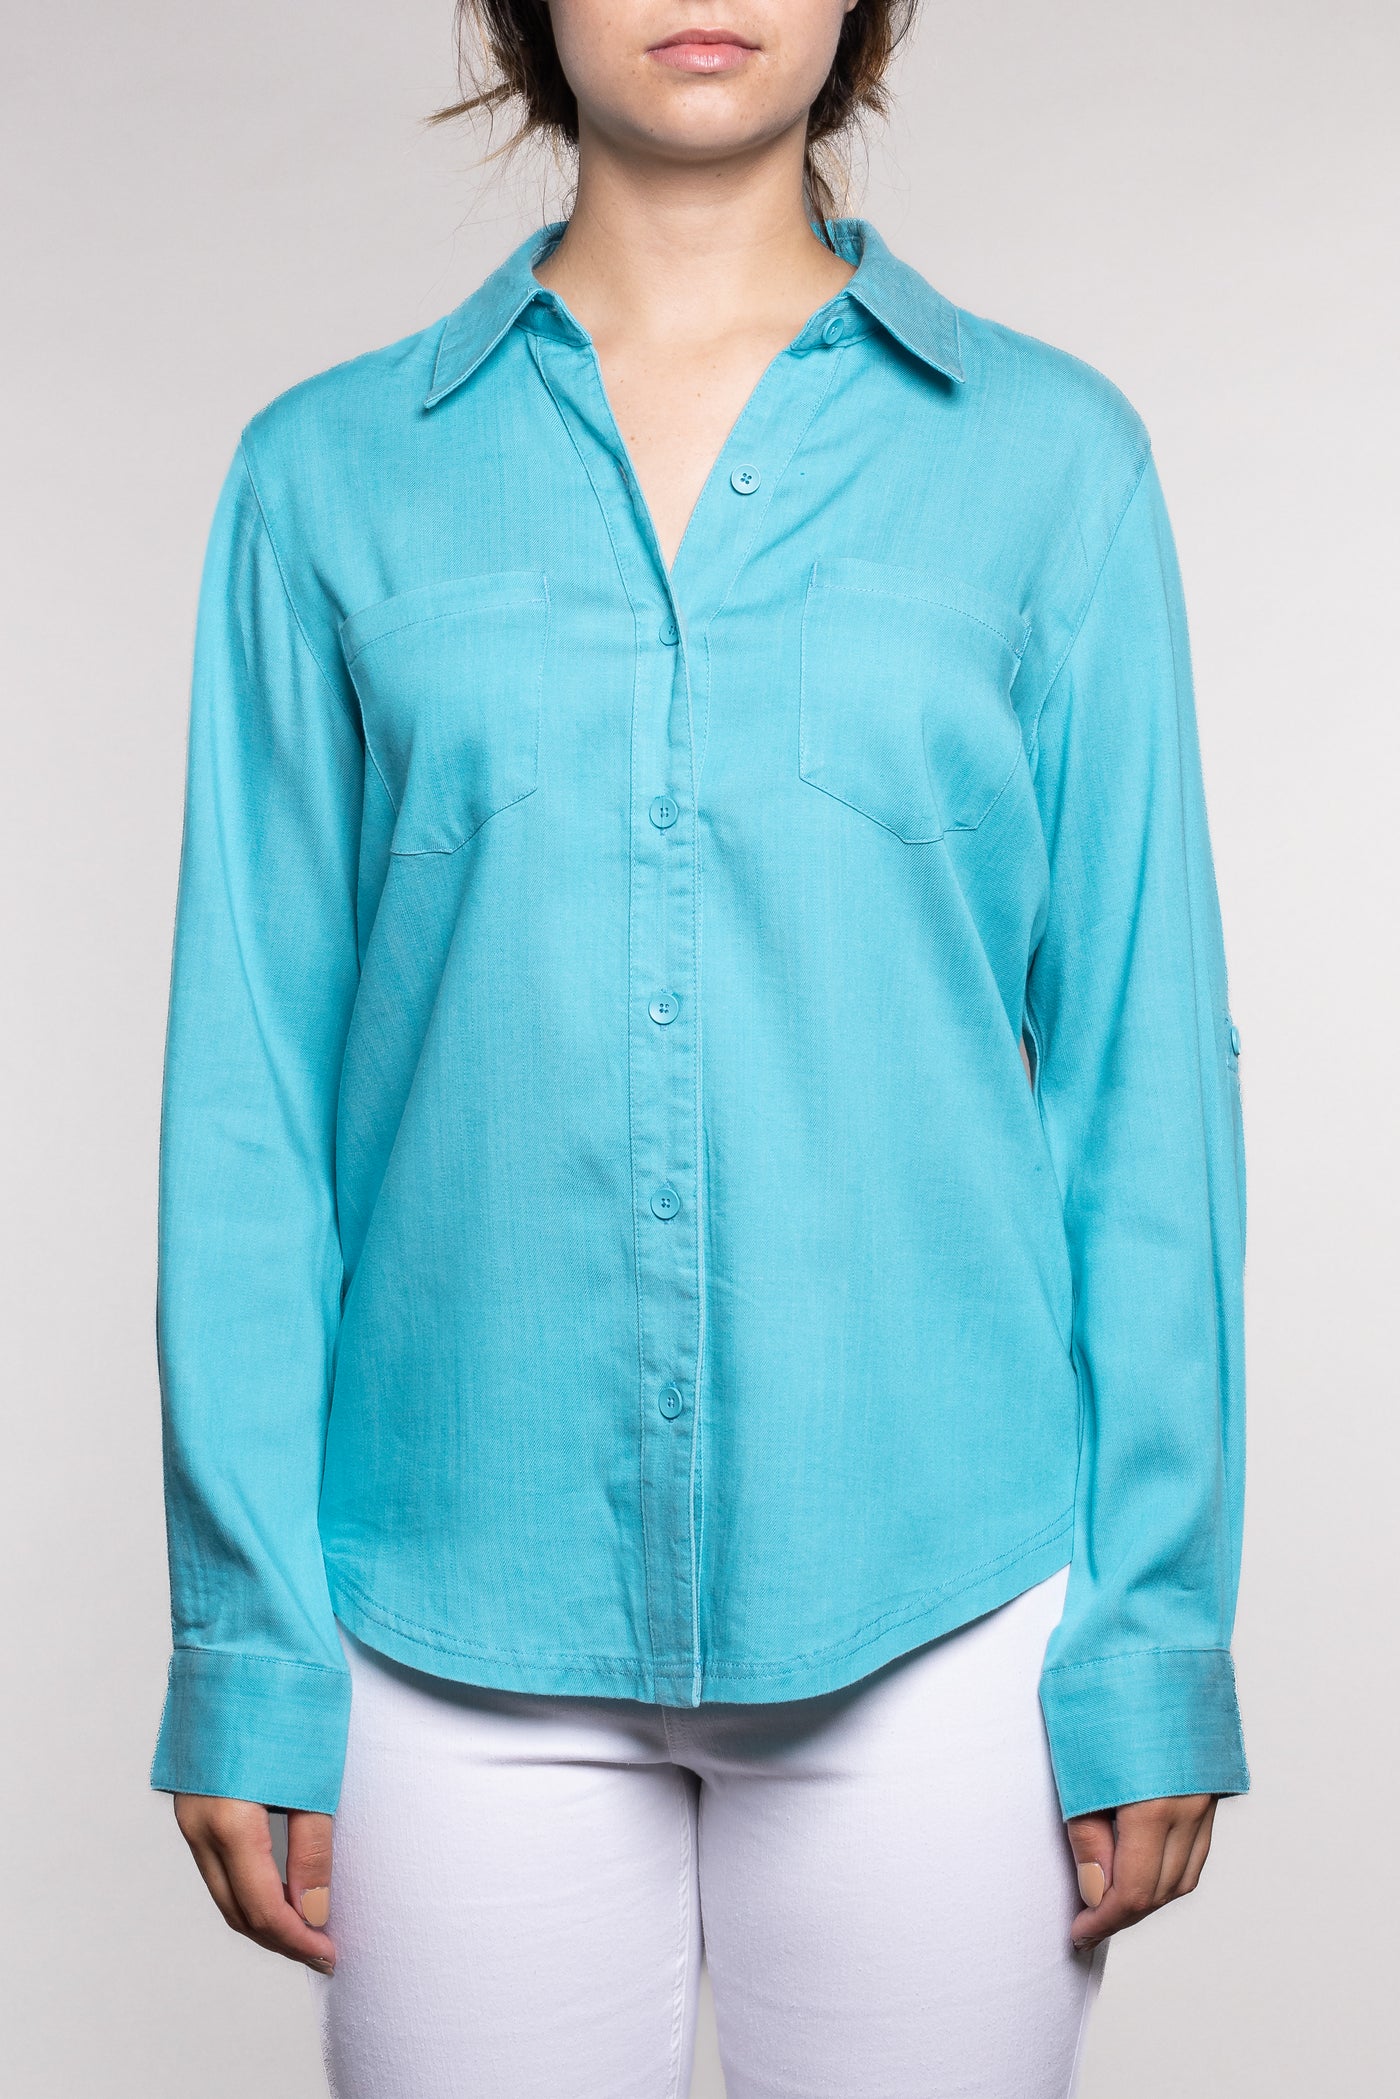 Turquoise Long Sleeve Blouse